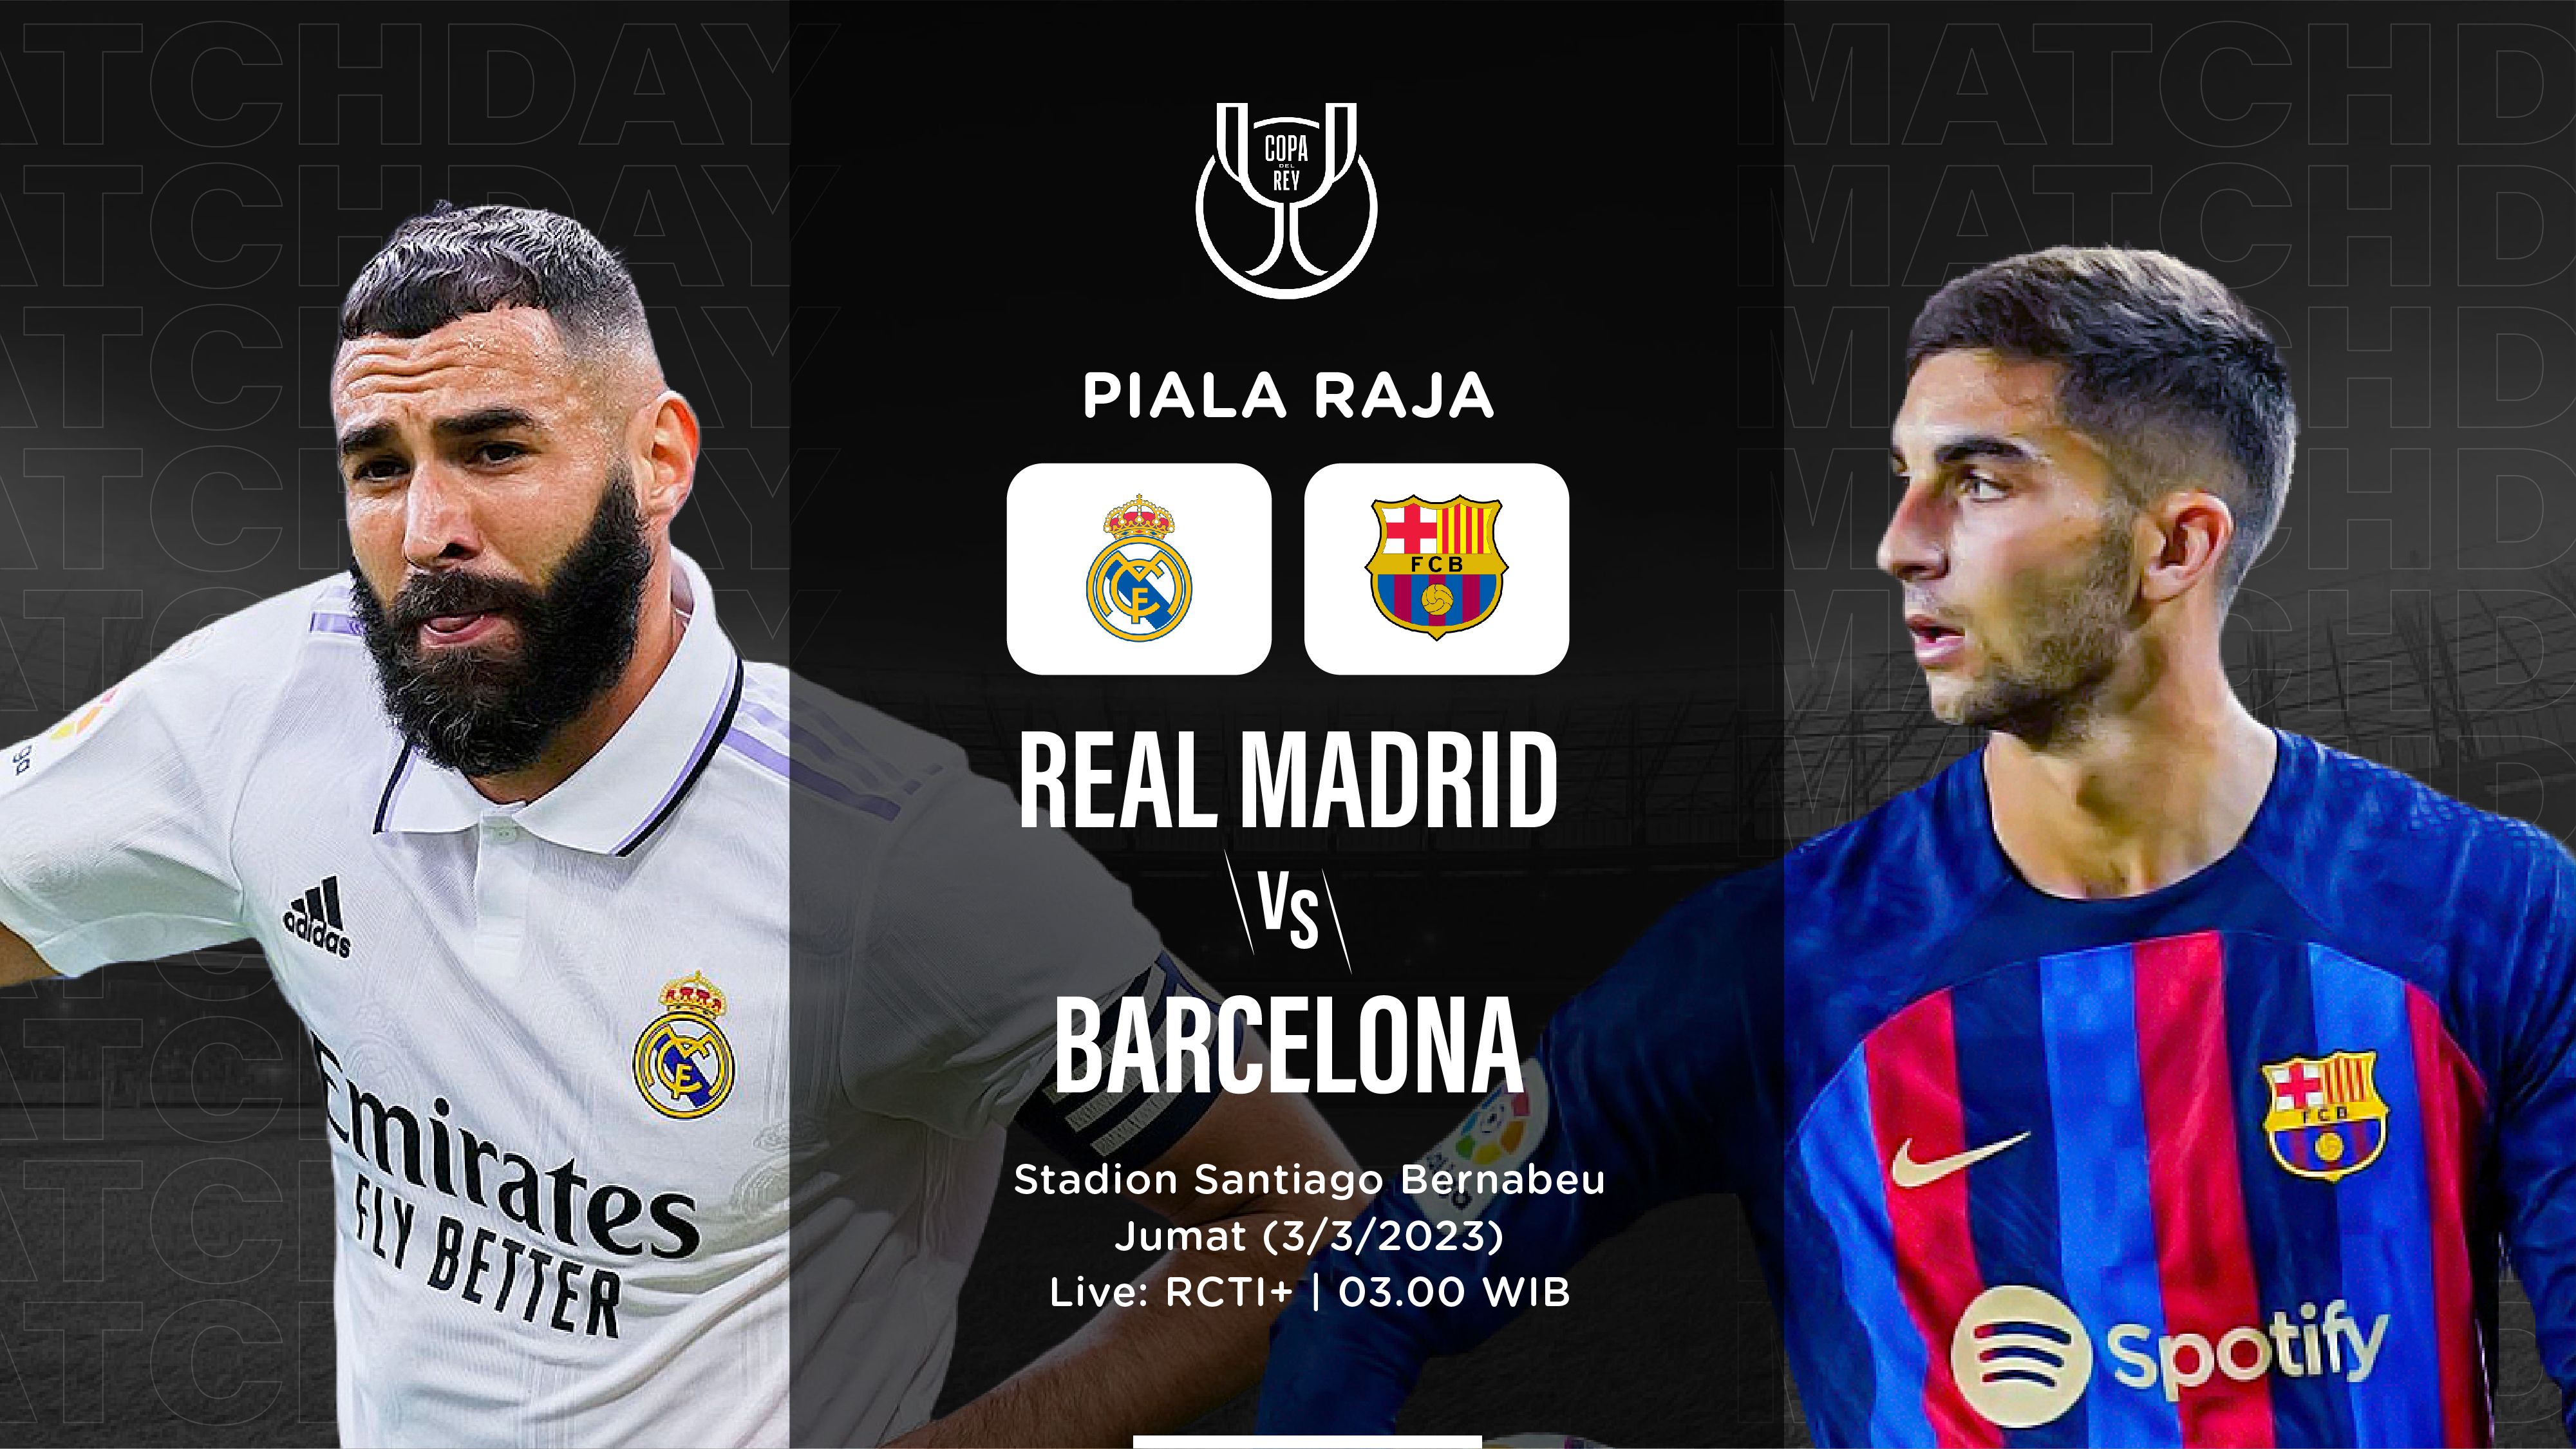 Prediksi dan Link Live Streaming Real Madrid vs Barcelona di Piala Raja 2022-2023